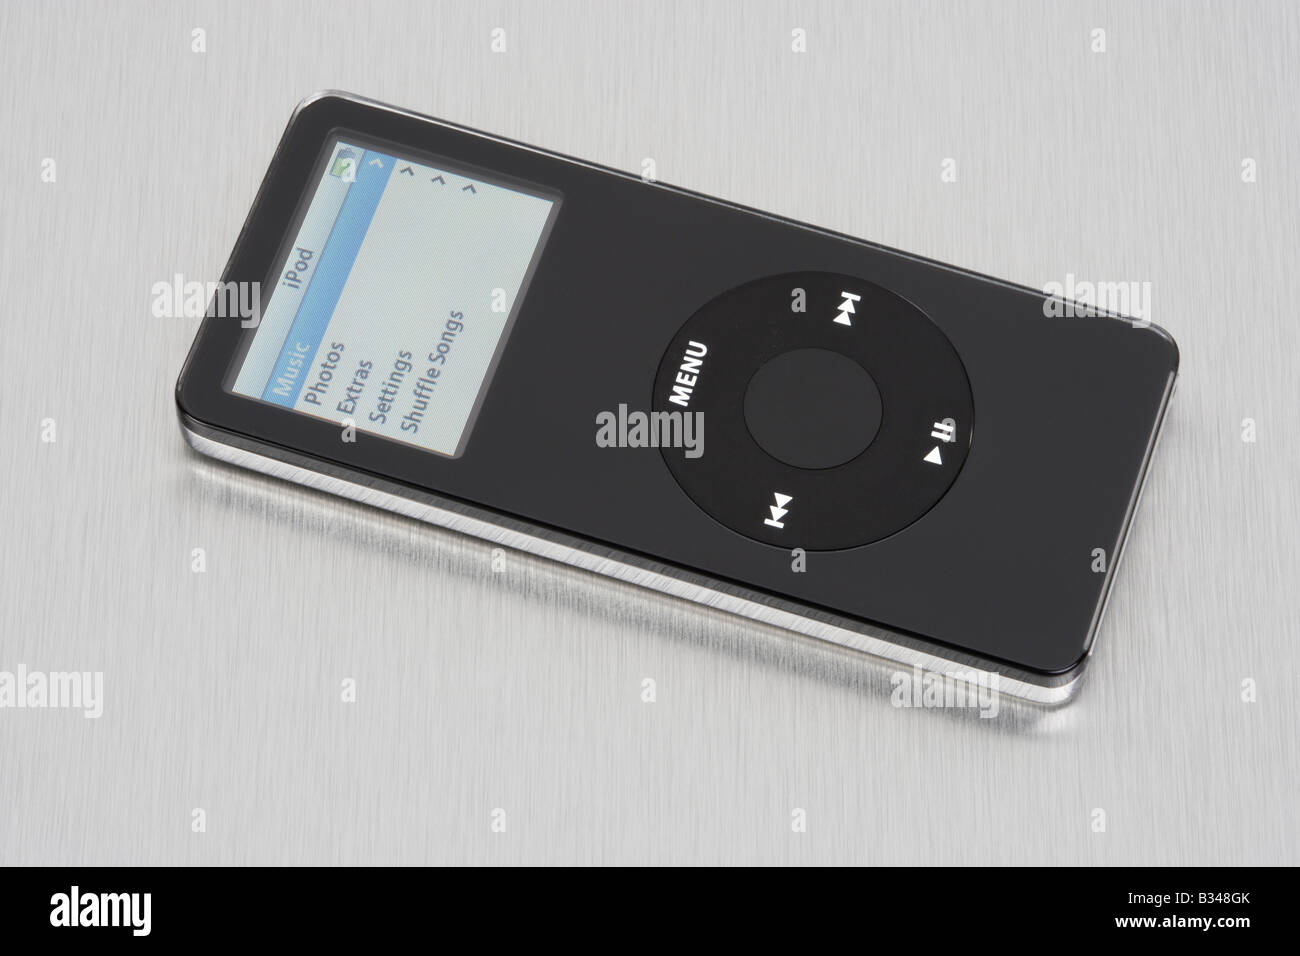 Apple ipod Nano music player and photo viewer Stock Photo